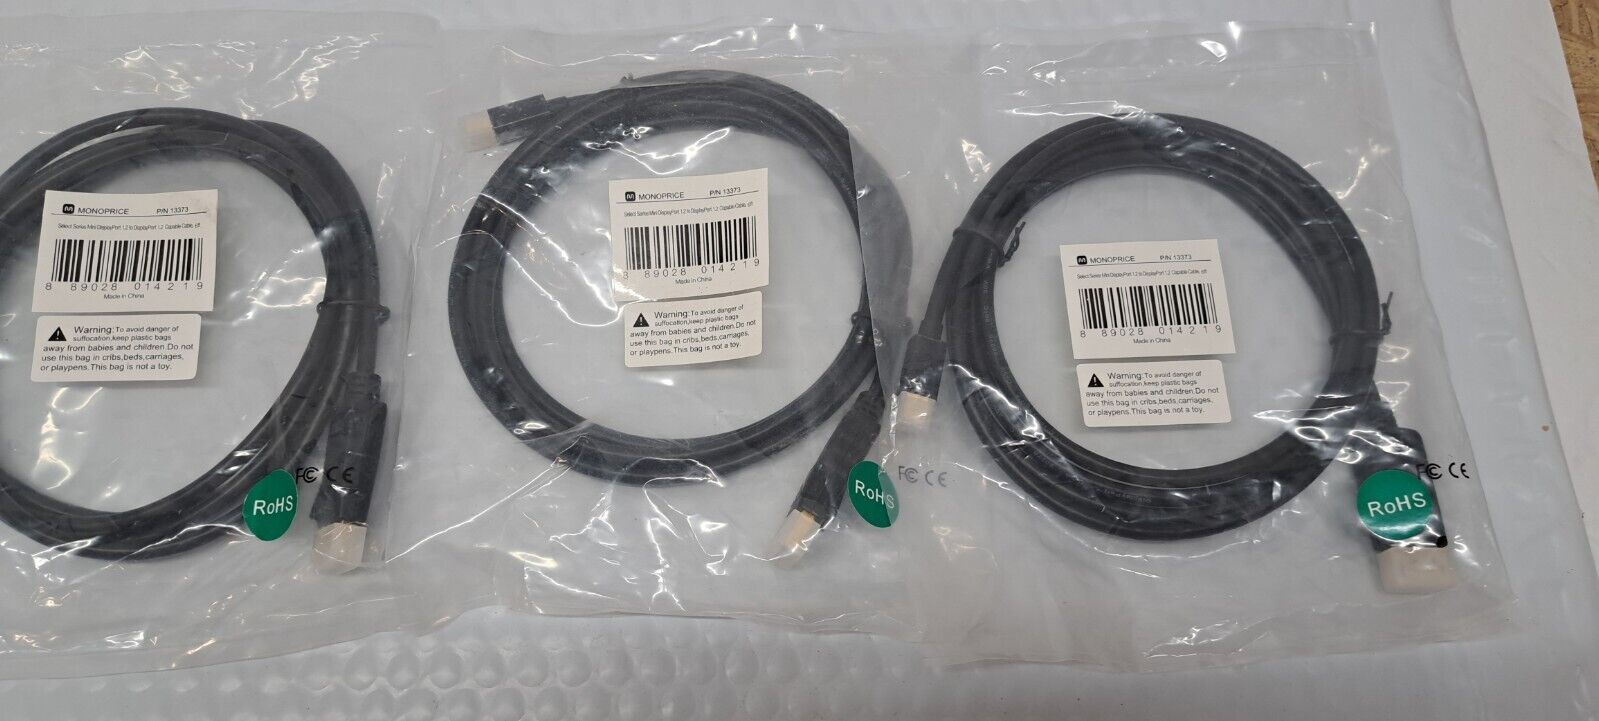 3X Monoprice Select Series Mini DisplayPort 1.2 to DisplayPort 1.2 Cable, 6ft